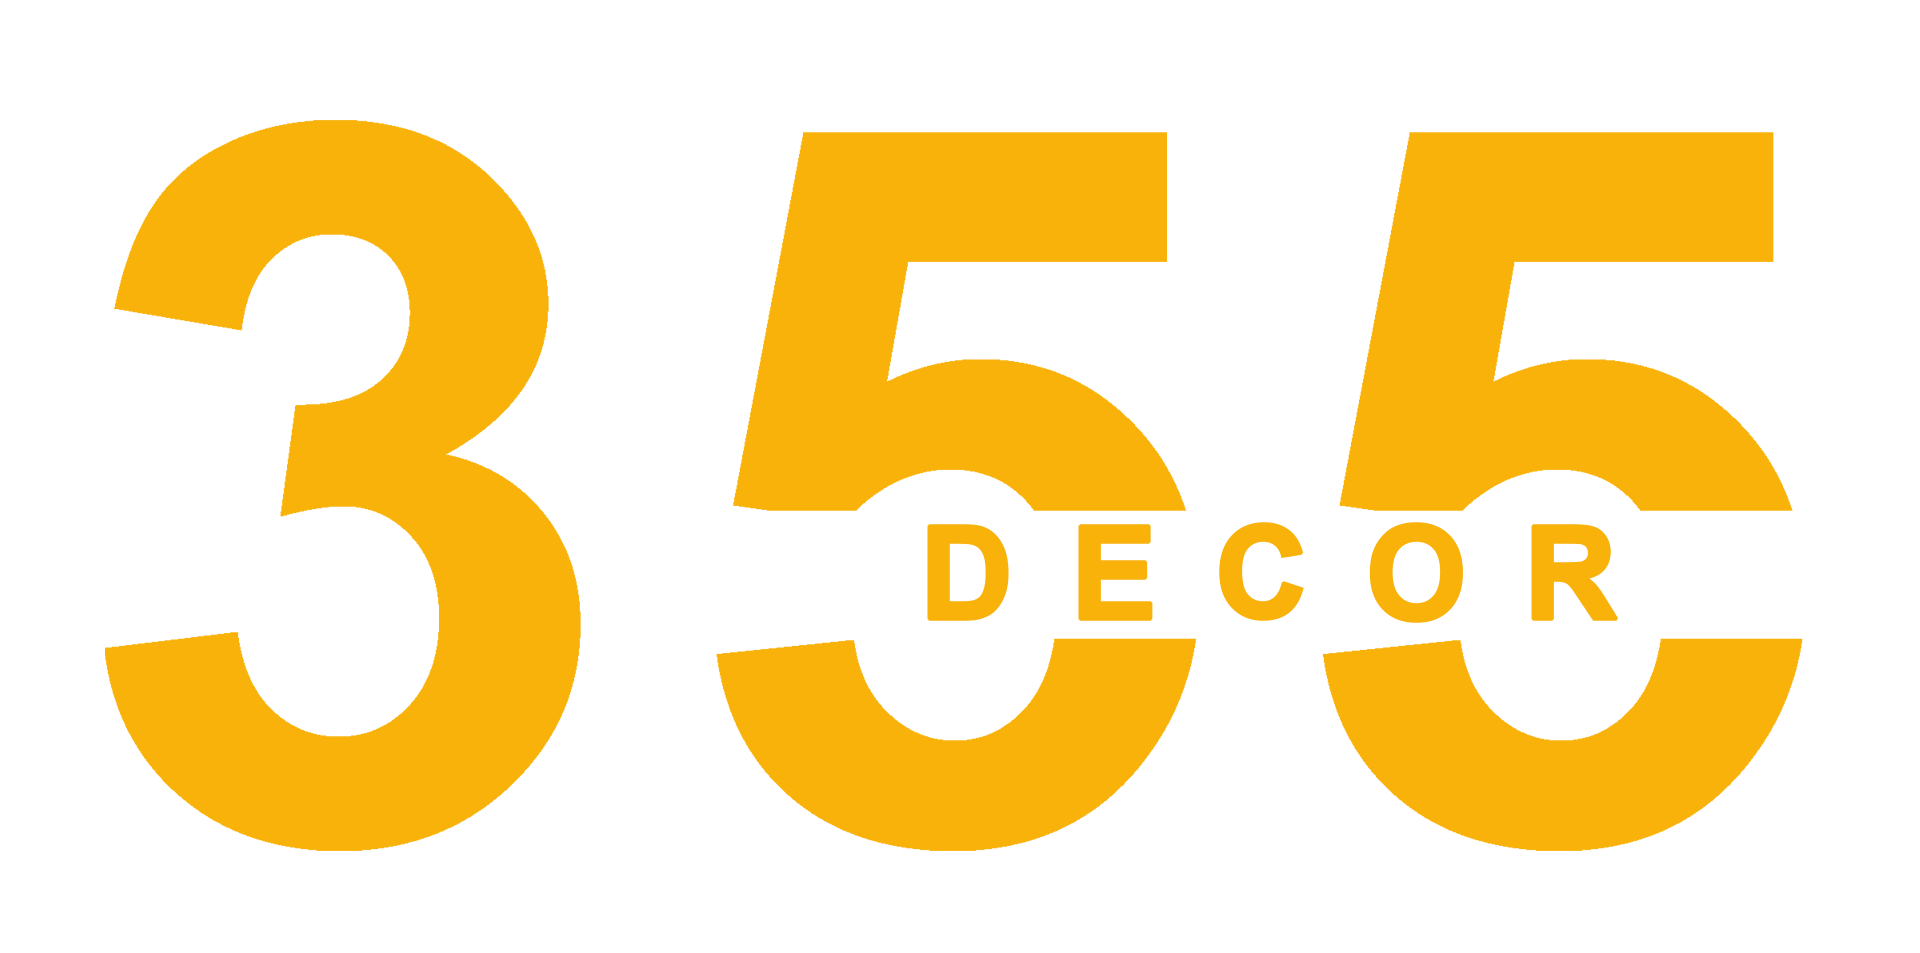 355 DECOR